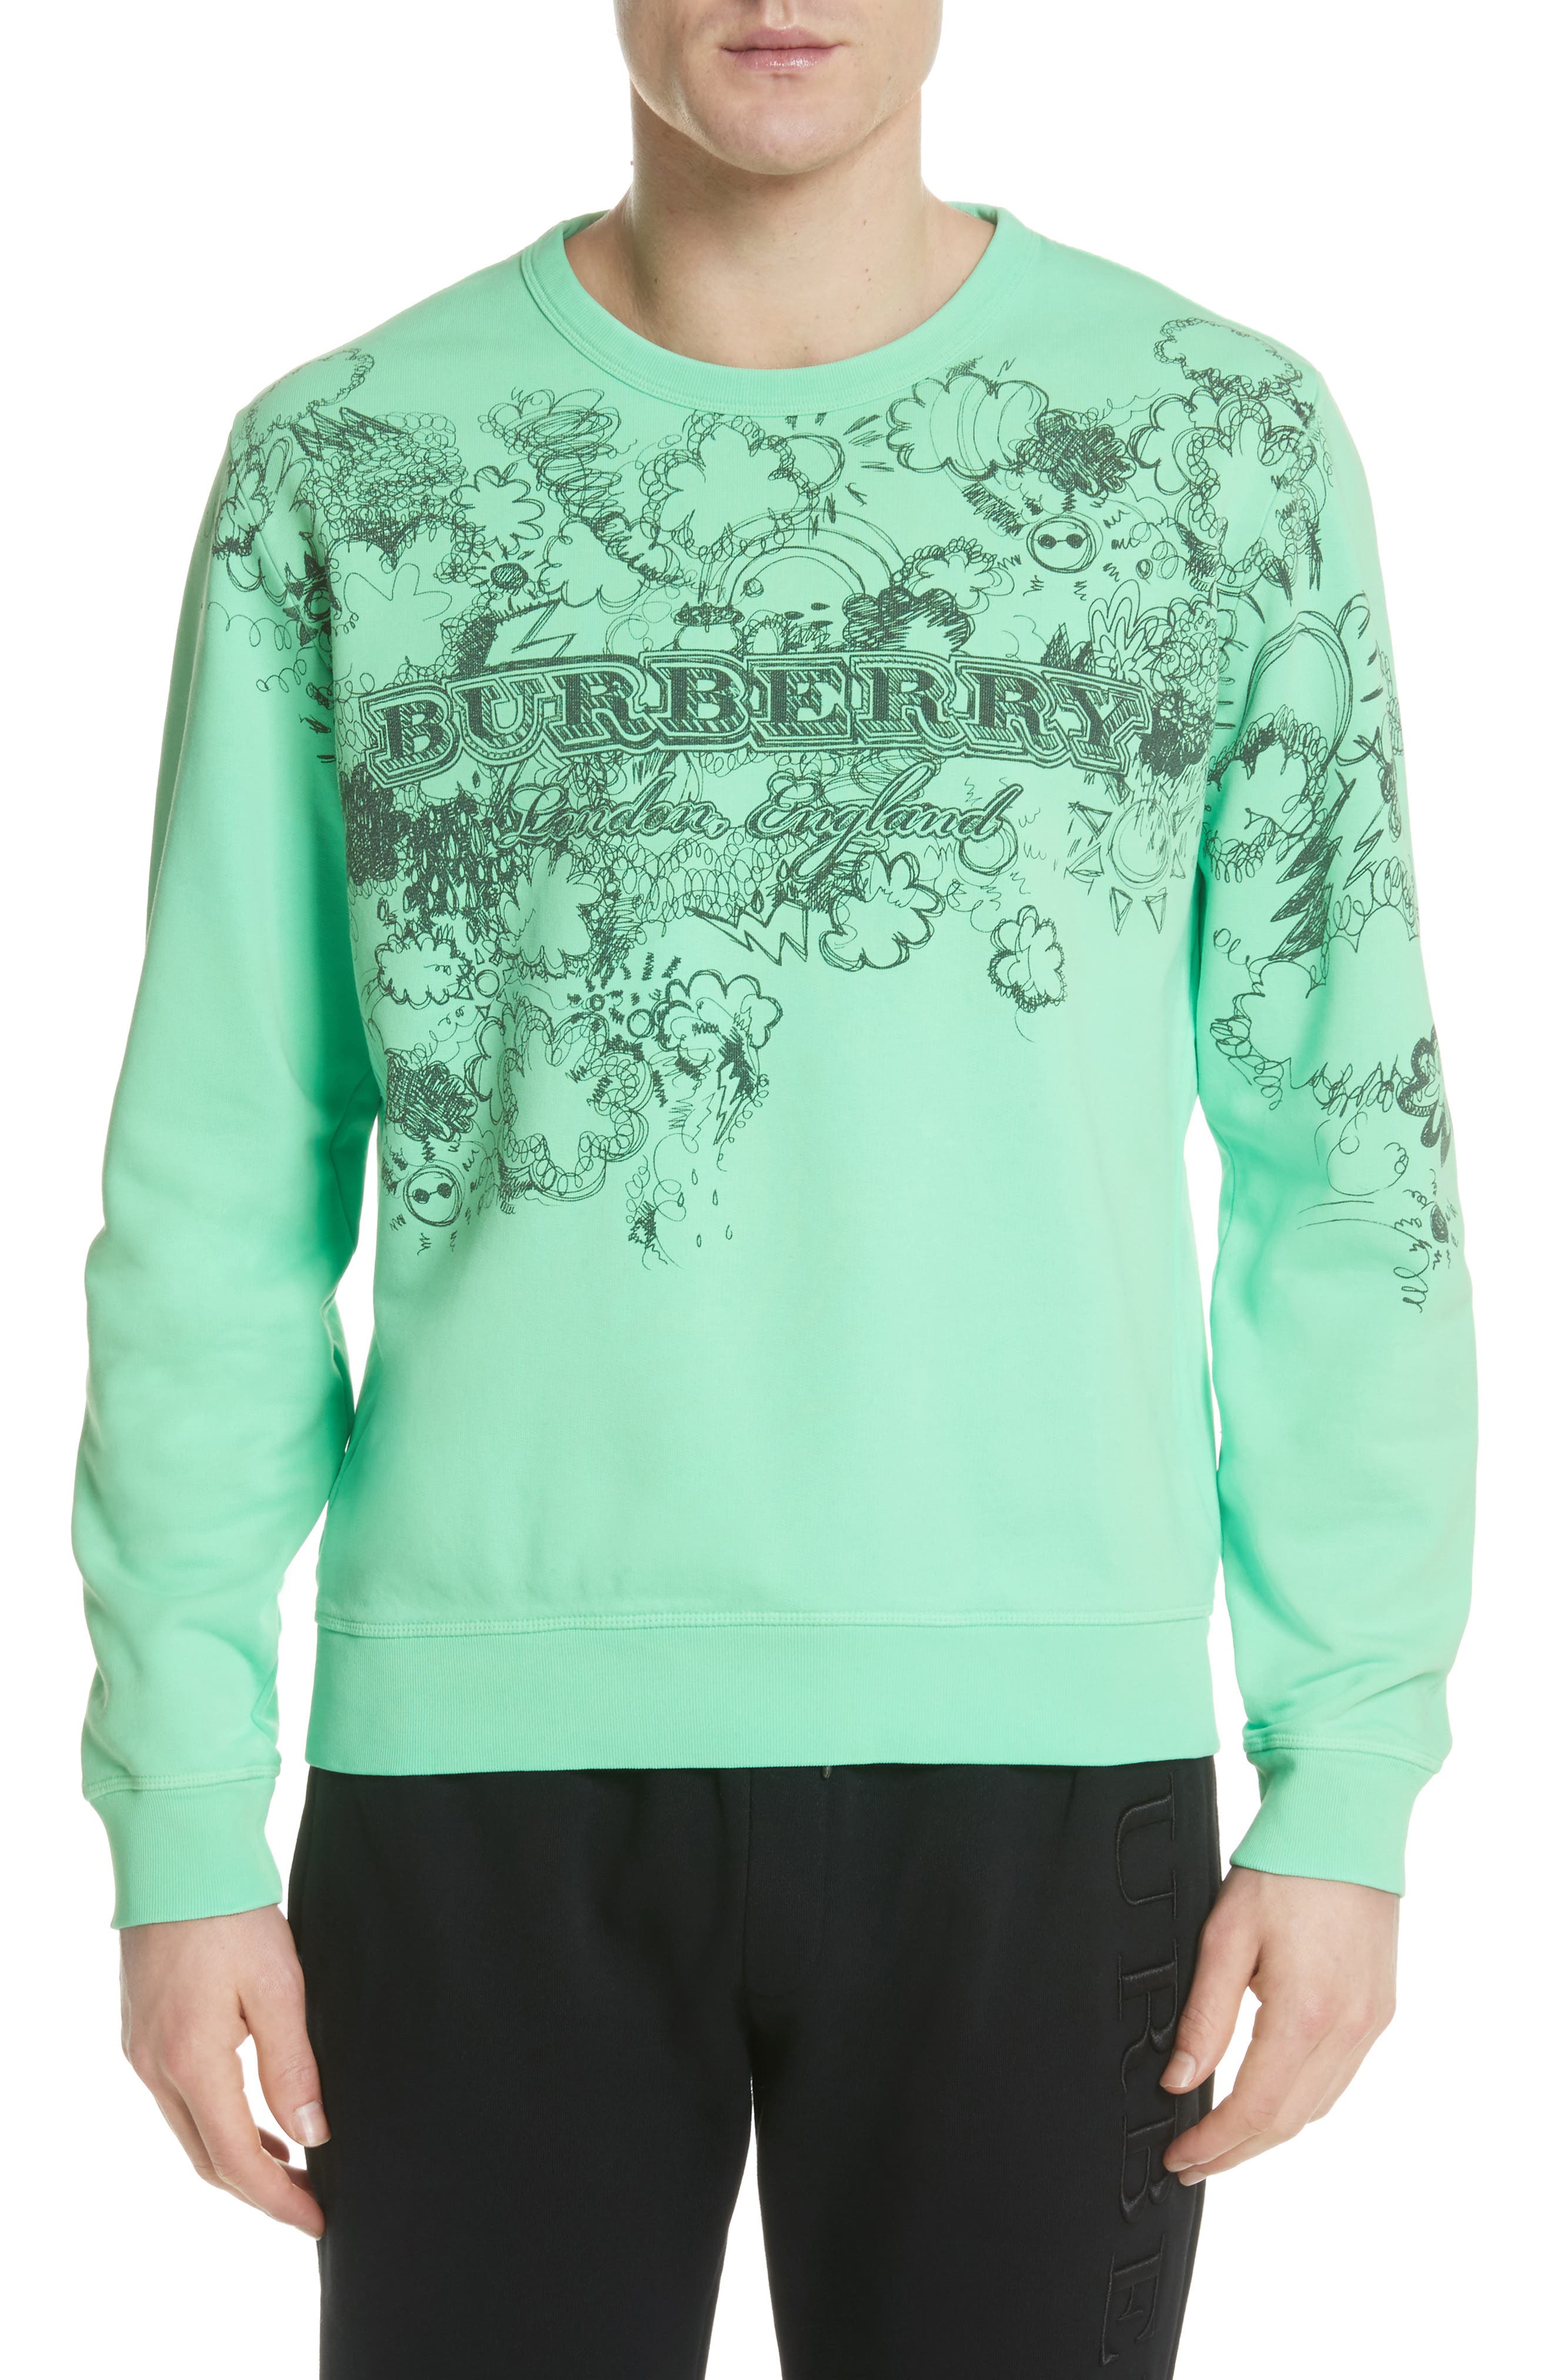 burberry green sweater